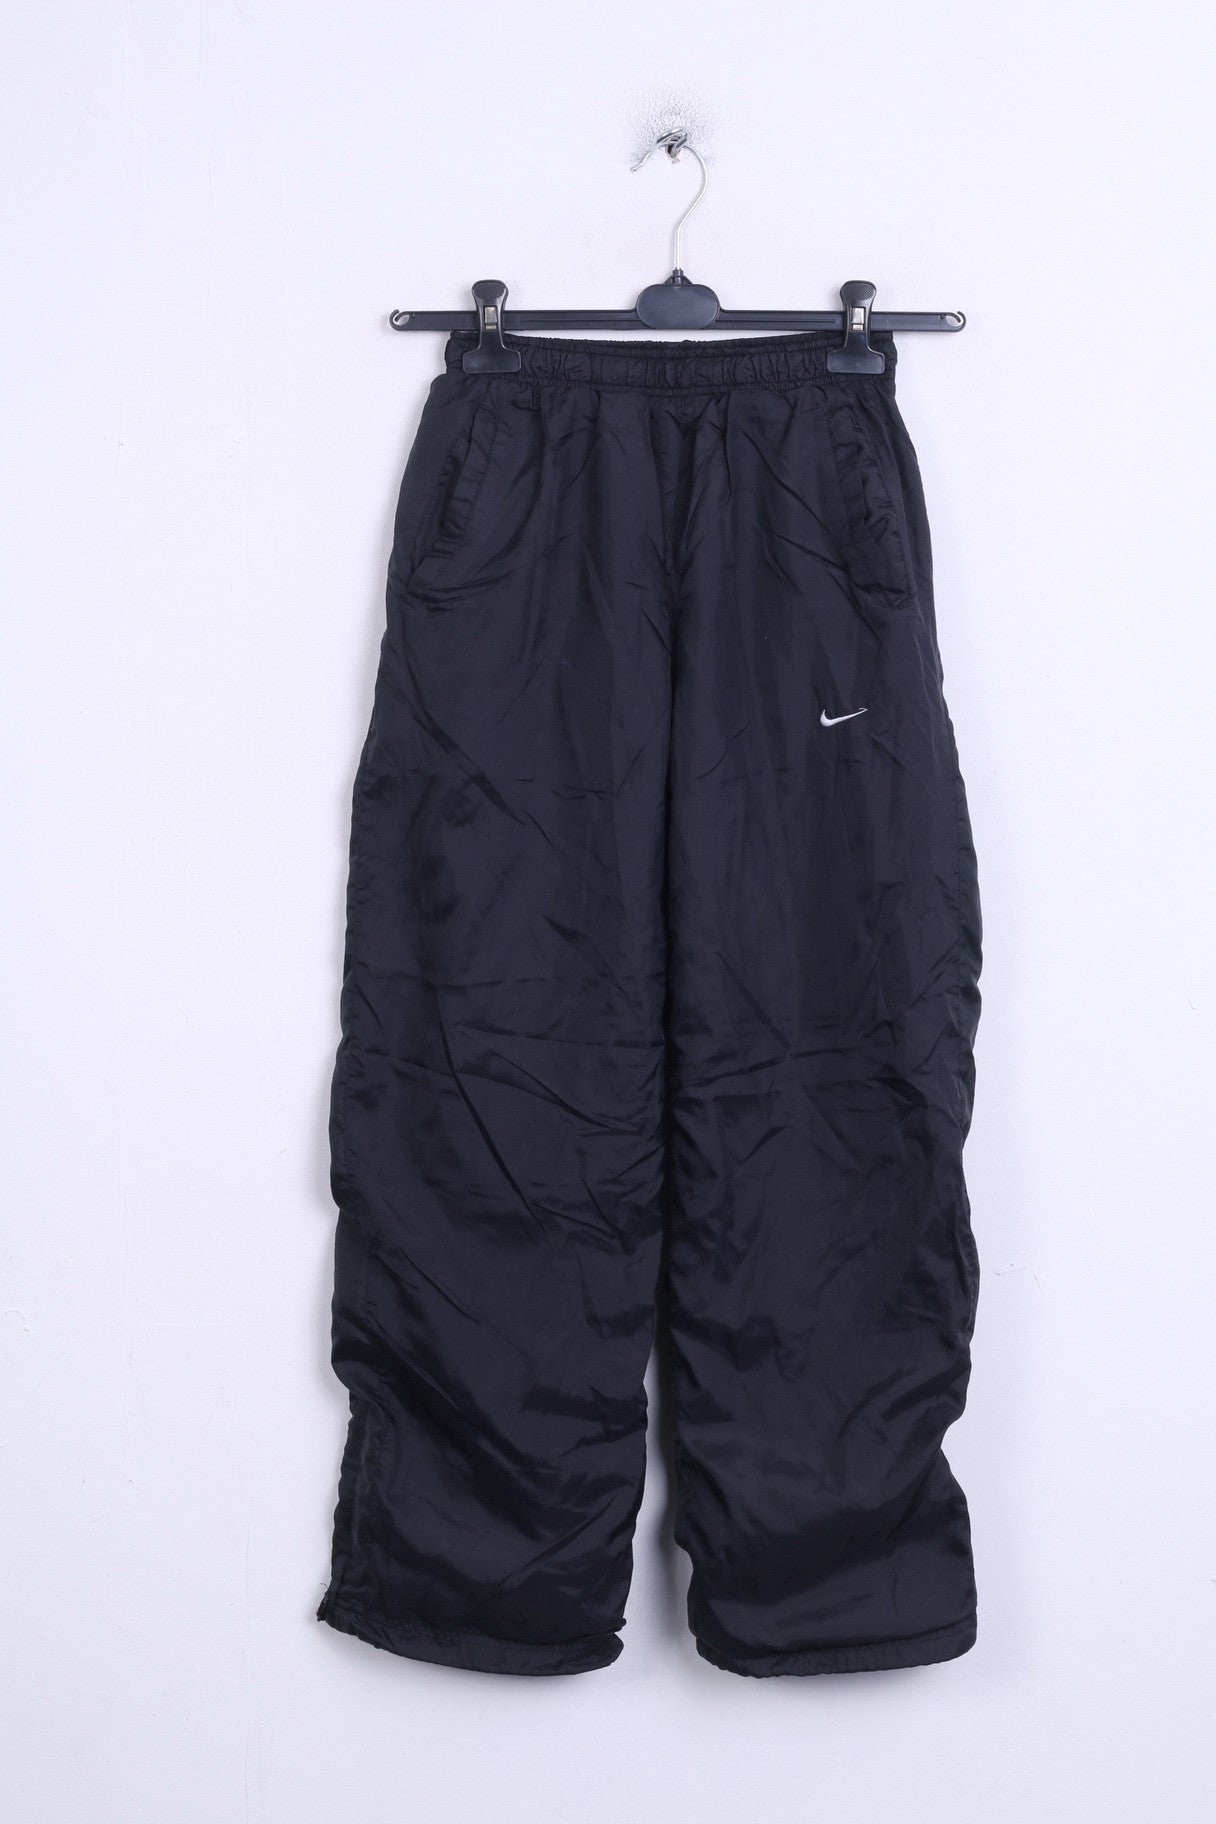 Nike Boys L (152-158) Trousers Black Sport Training Tracksuit Bottom - RetrospectClothes